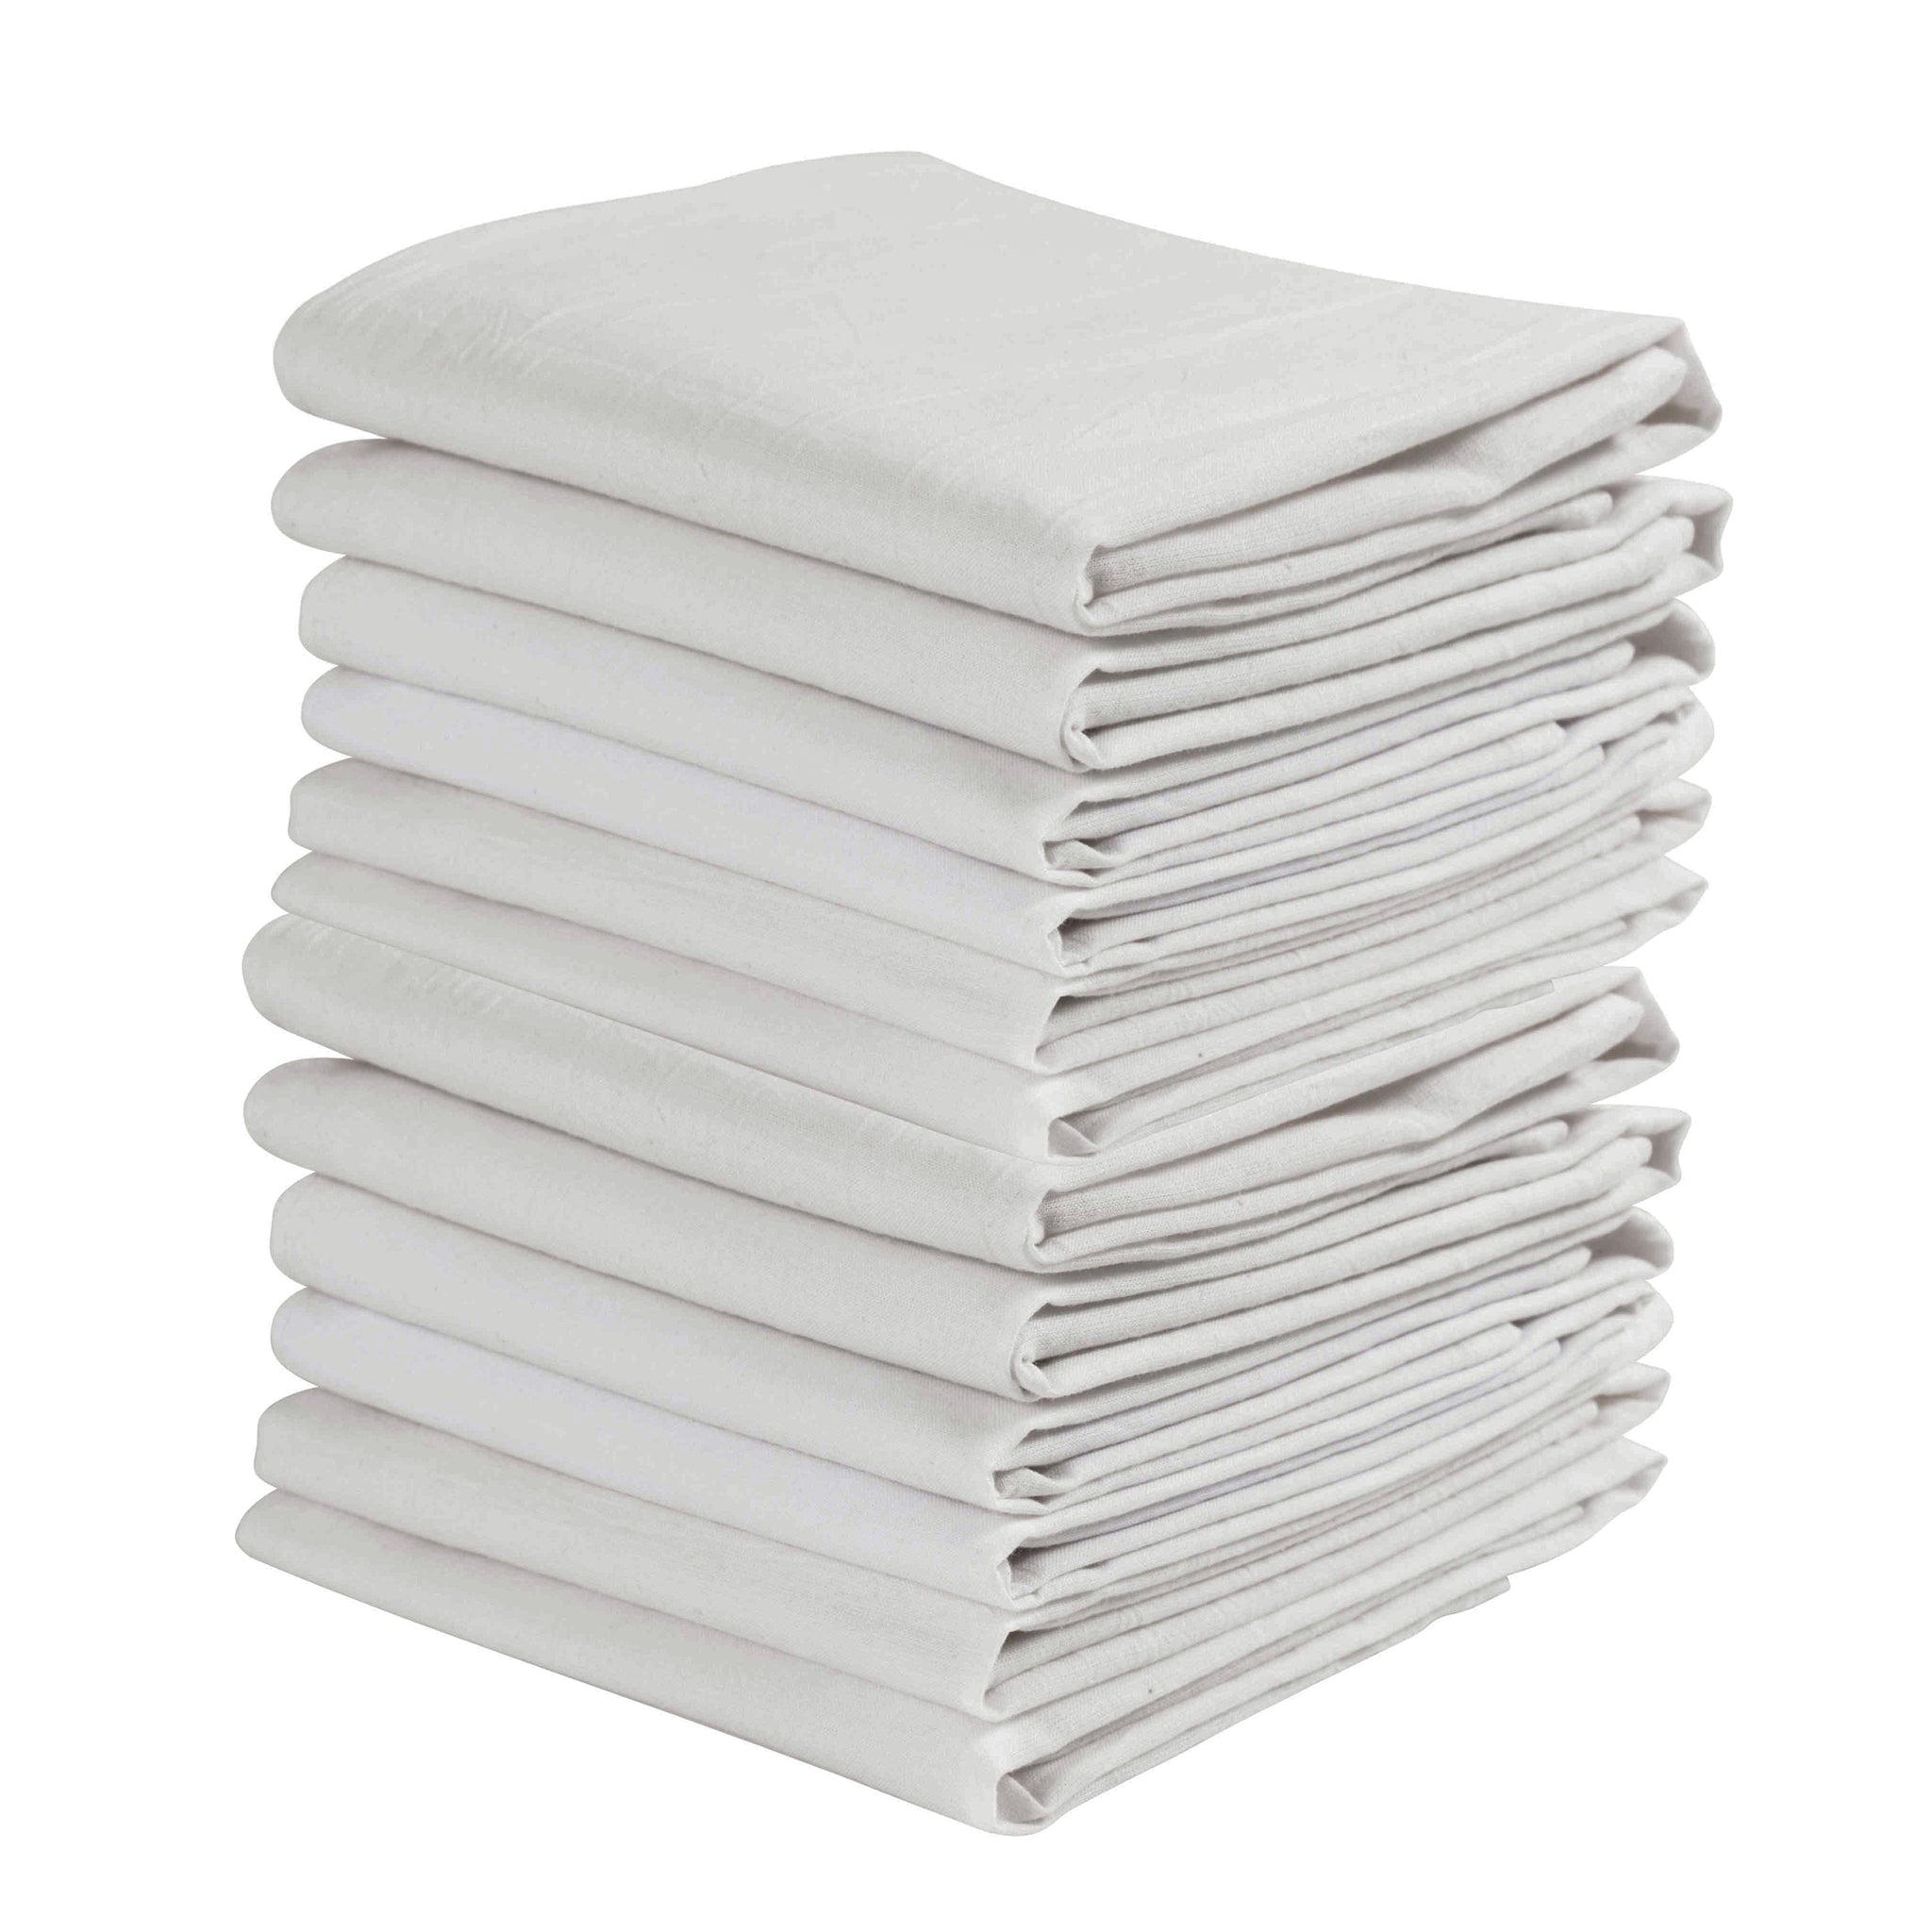 Craft Basics Premium Flour Sack Towel: 10-Pack, Size: 20 x 20, White